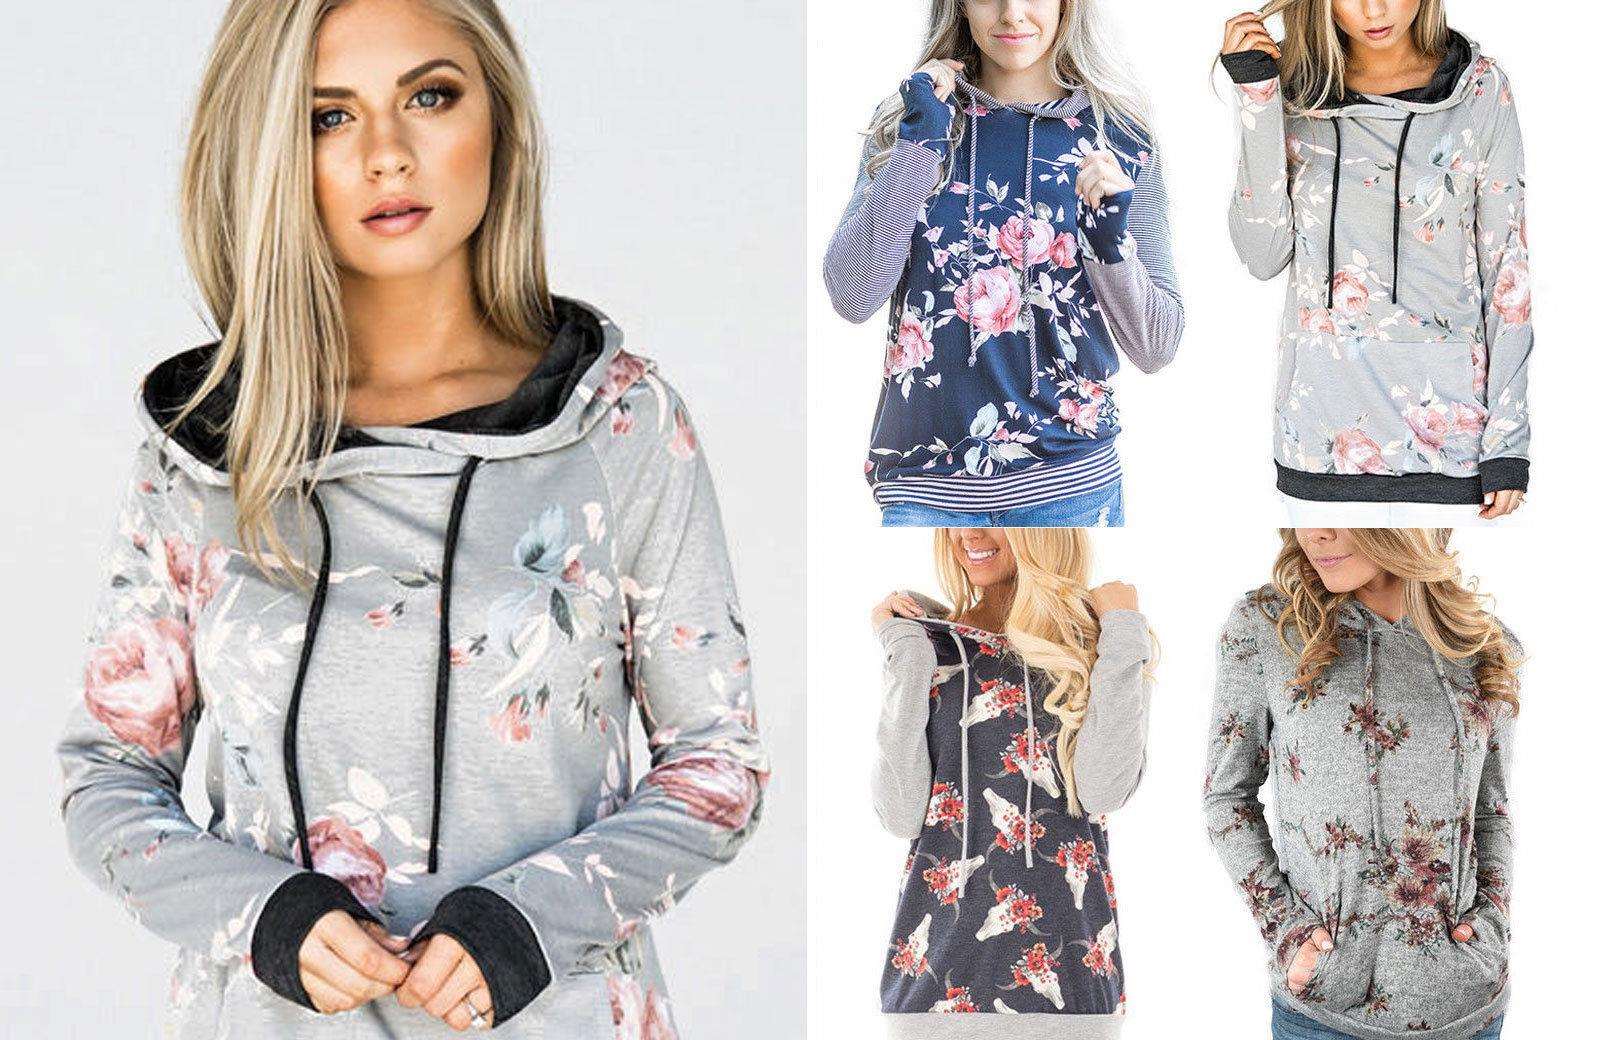 This women's hoodie is a popular item on eBay